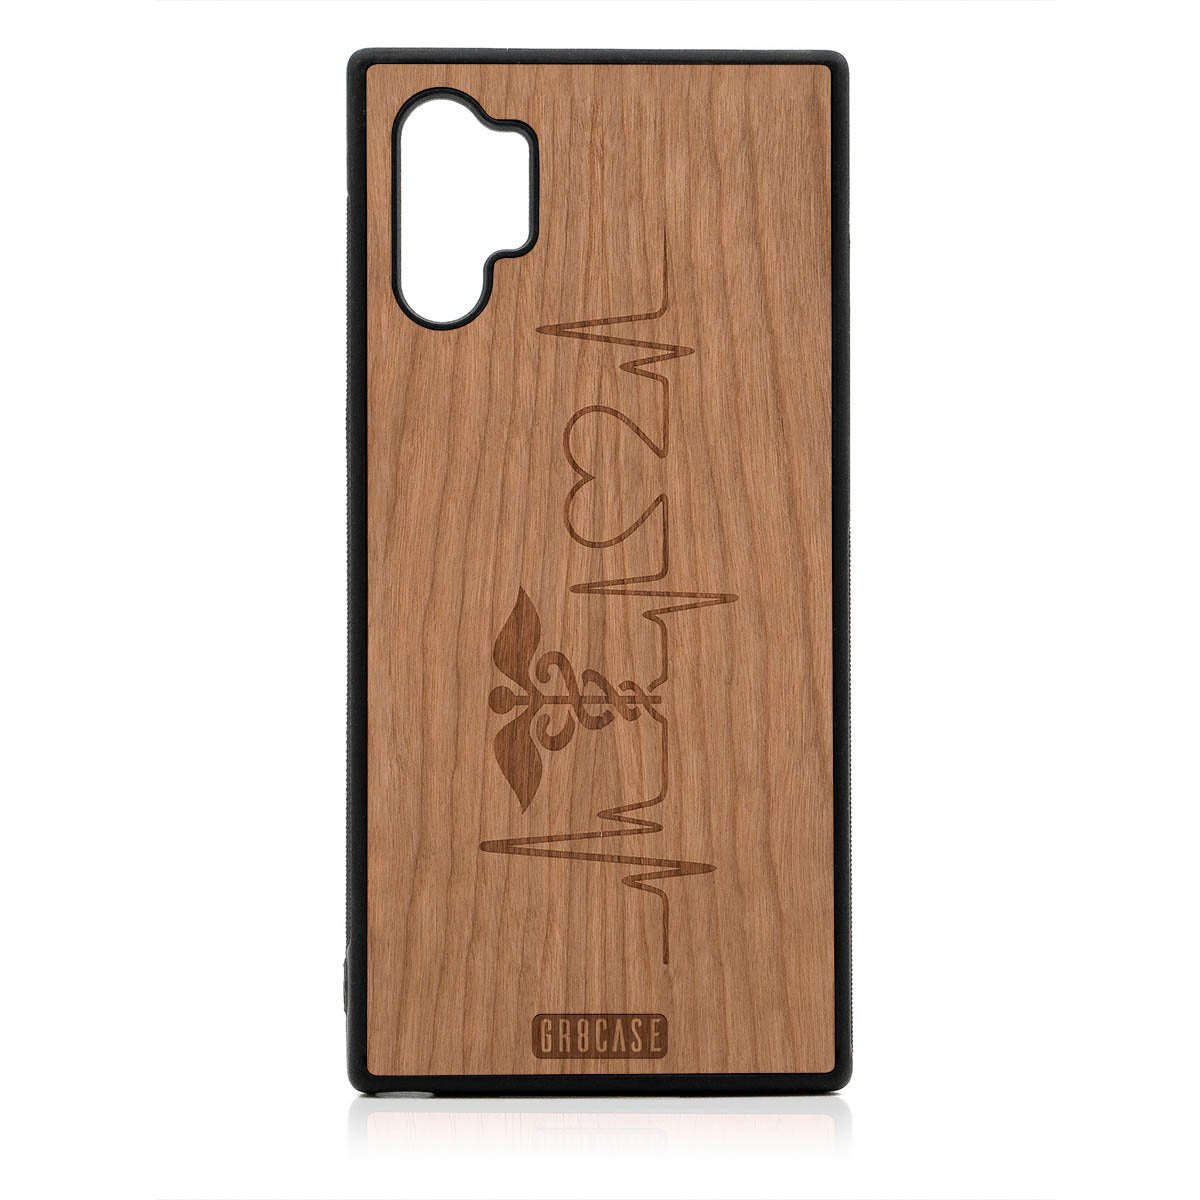 Hero's Heart (Nurse, Doctor) Design Wood Case Samsung Galaxy Note 10 Plus by GR8CASE